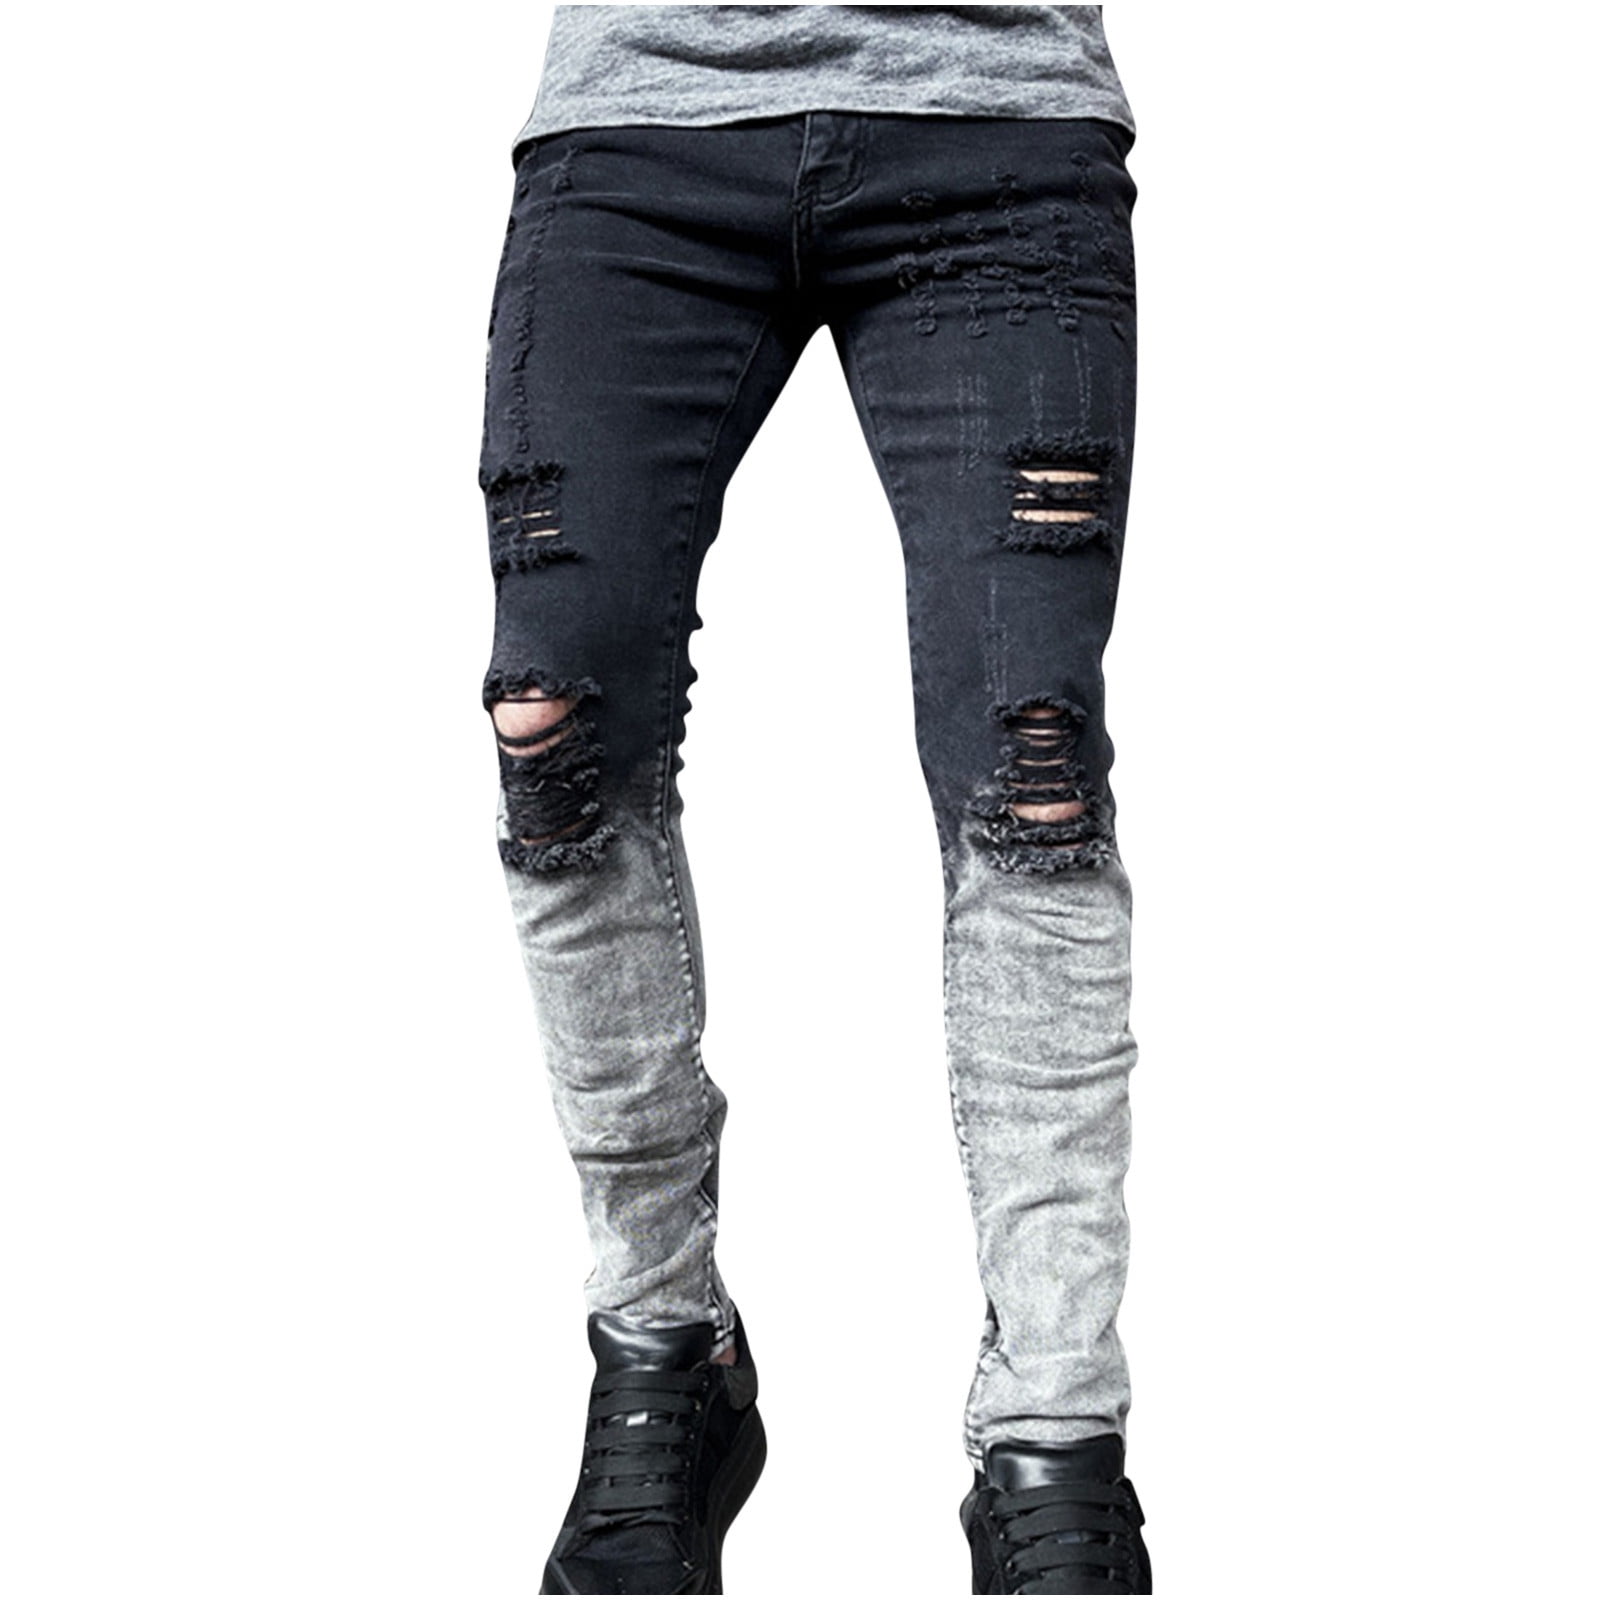 Hfyihgf Men\'s Slim Fit Stretch Jeans Ripped Skinny Jeans for Men Distressed Straight  Leg Fashion Comfort Flex Waist Denim Pants(Gray,3XL)